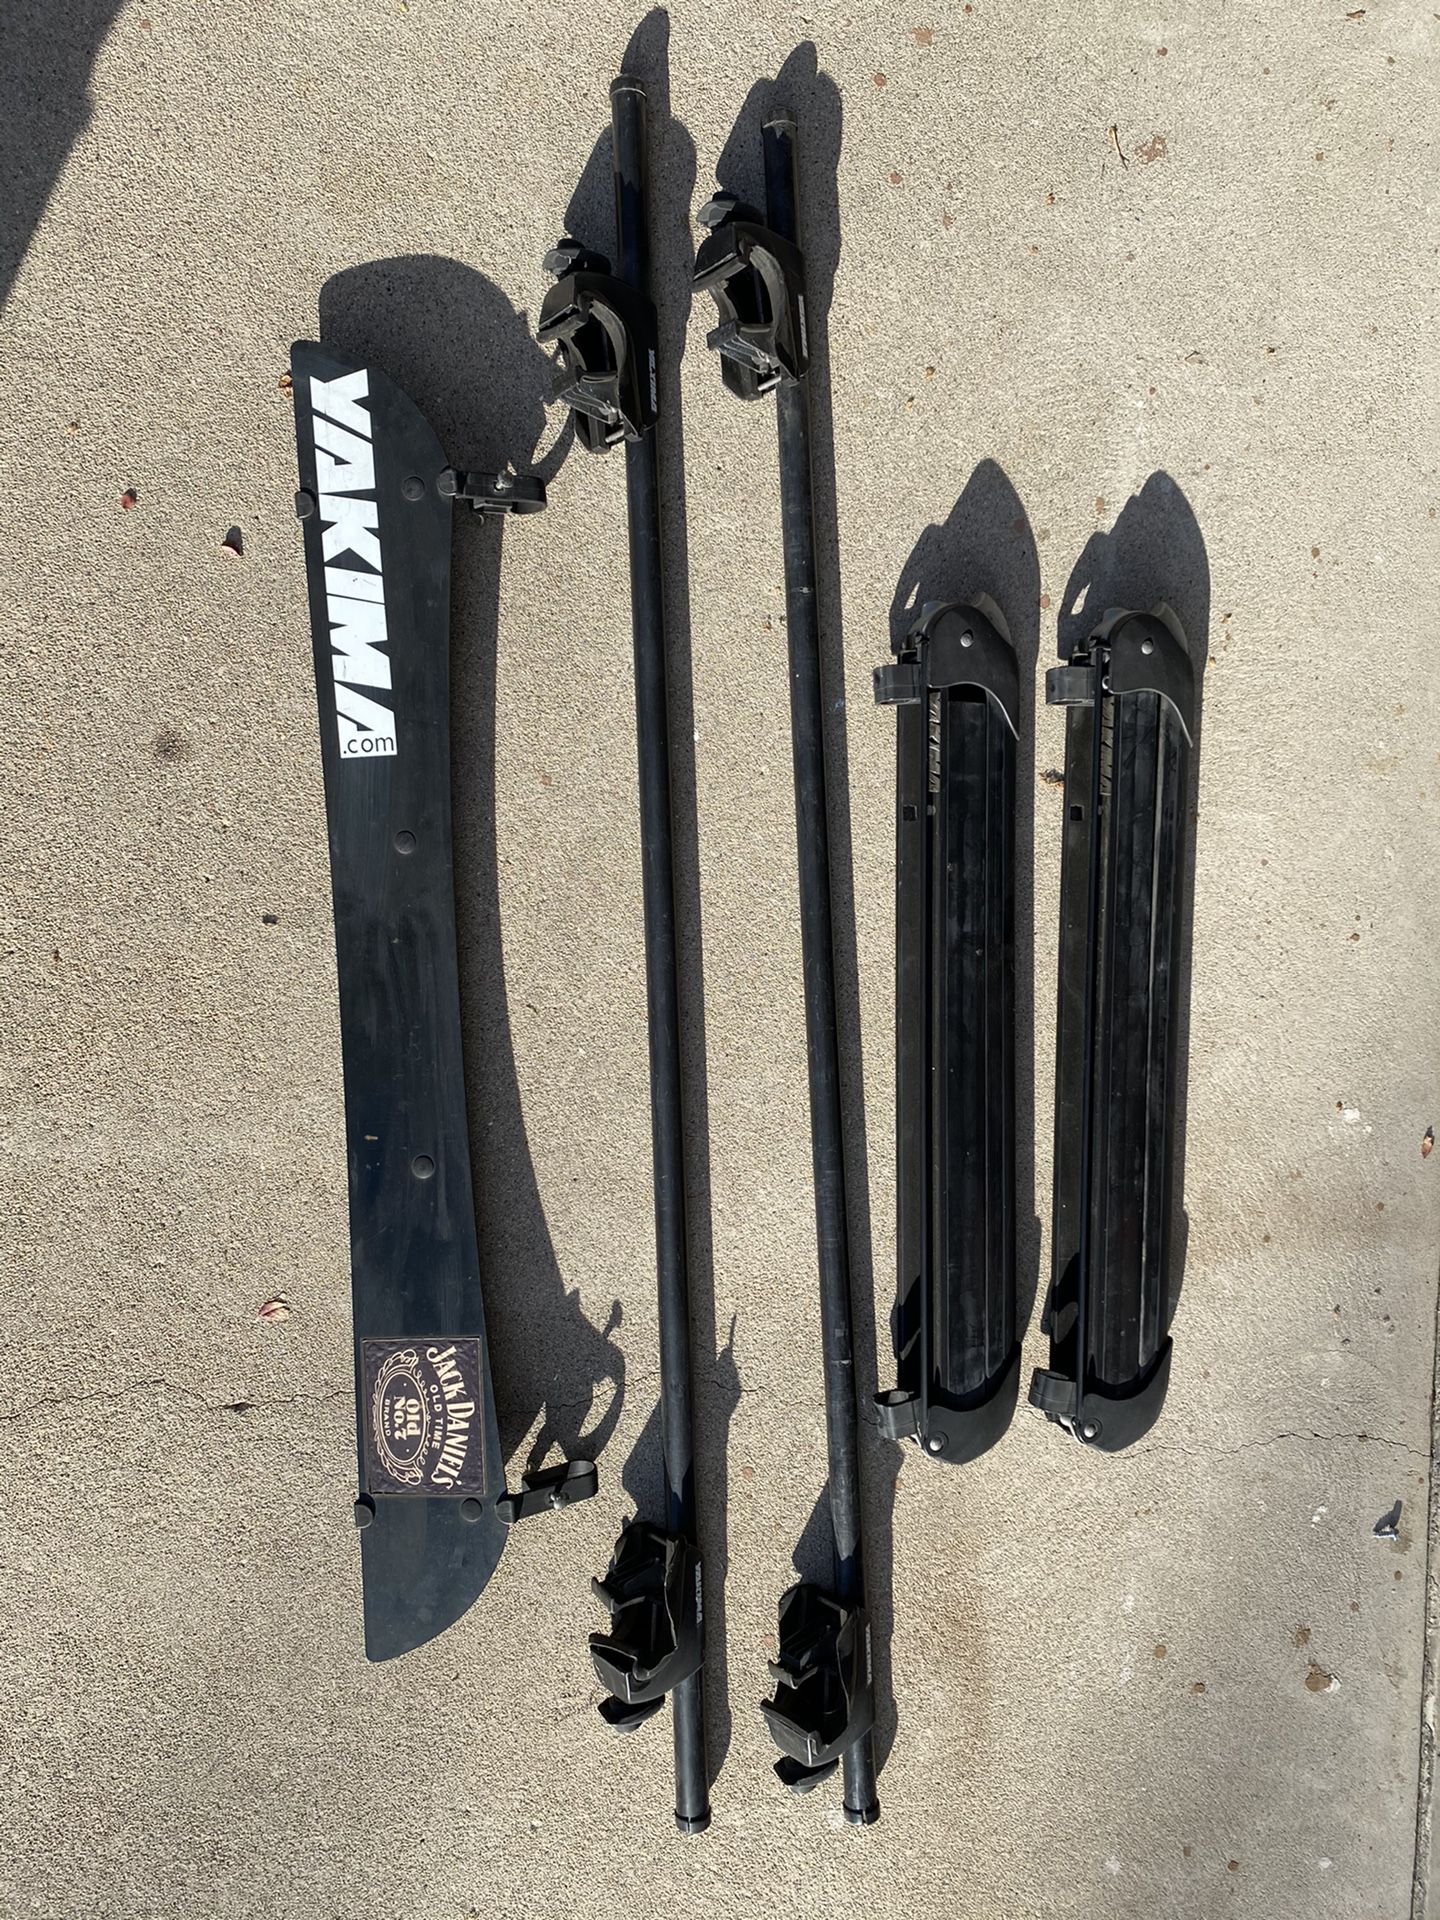 Yakima Snowboard Rack And Cross Bars